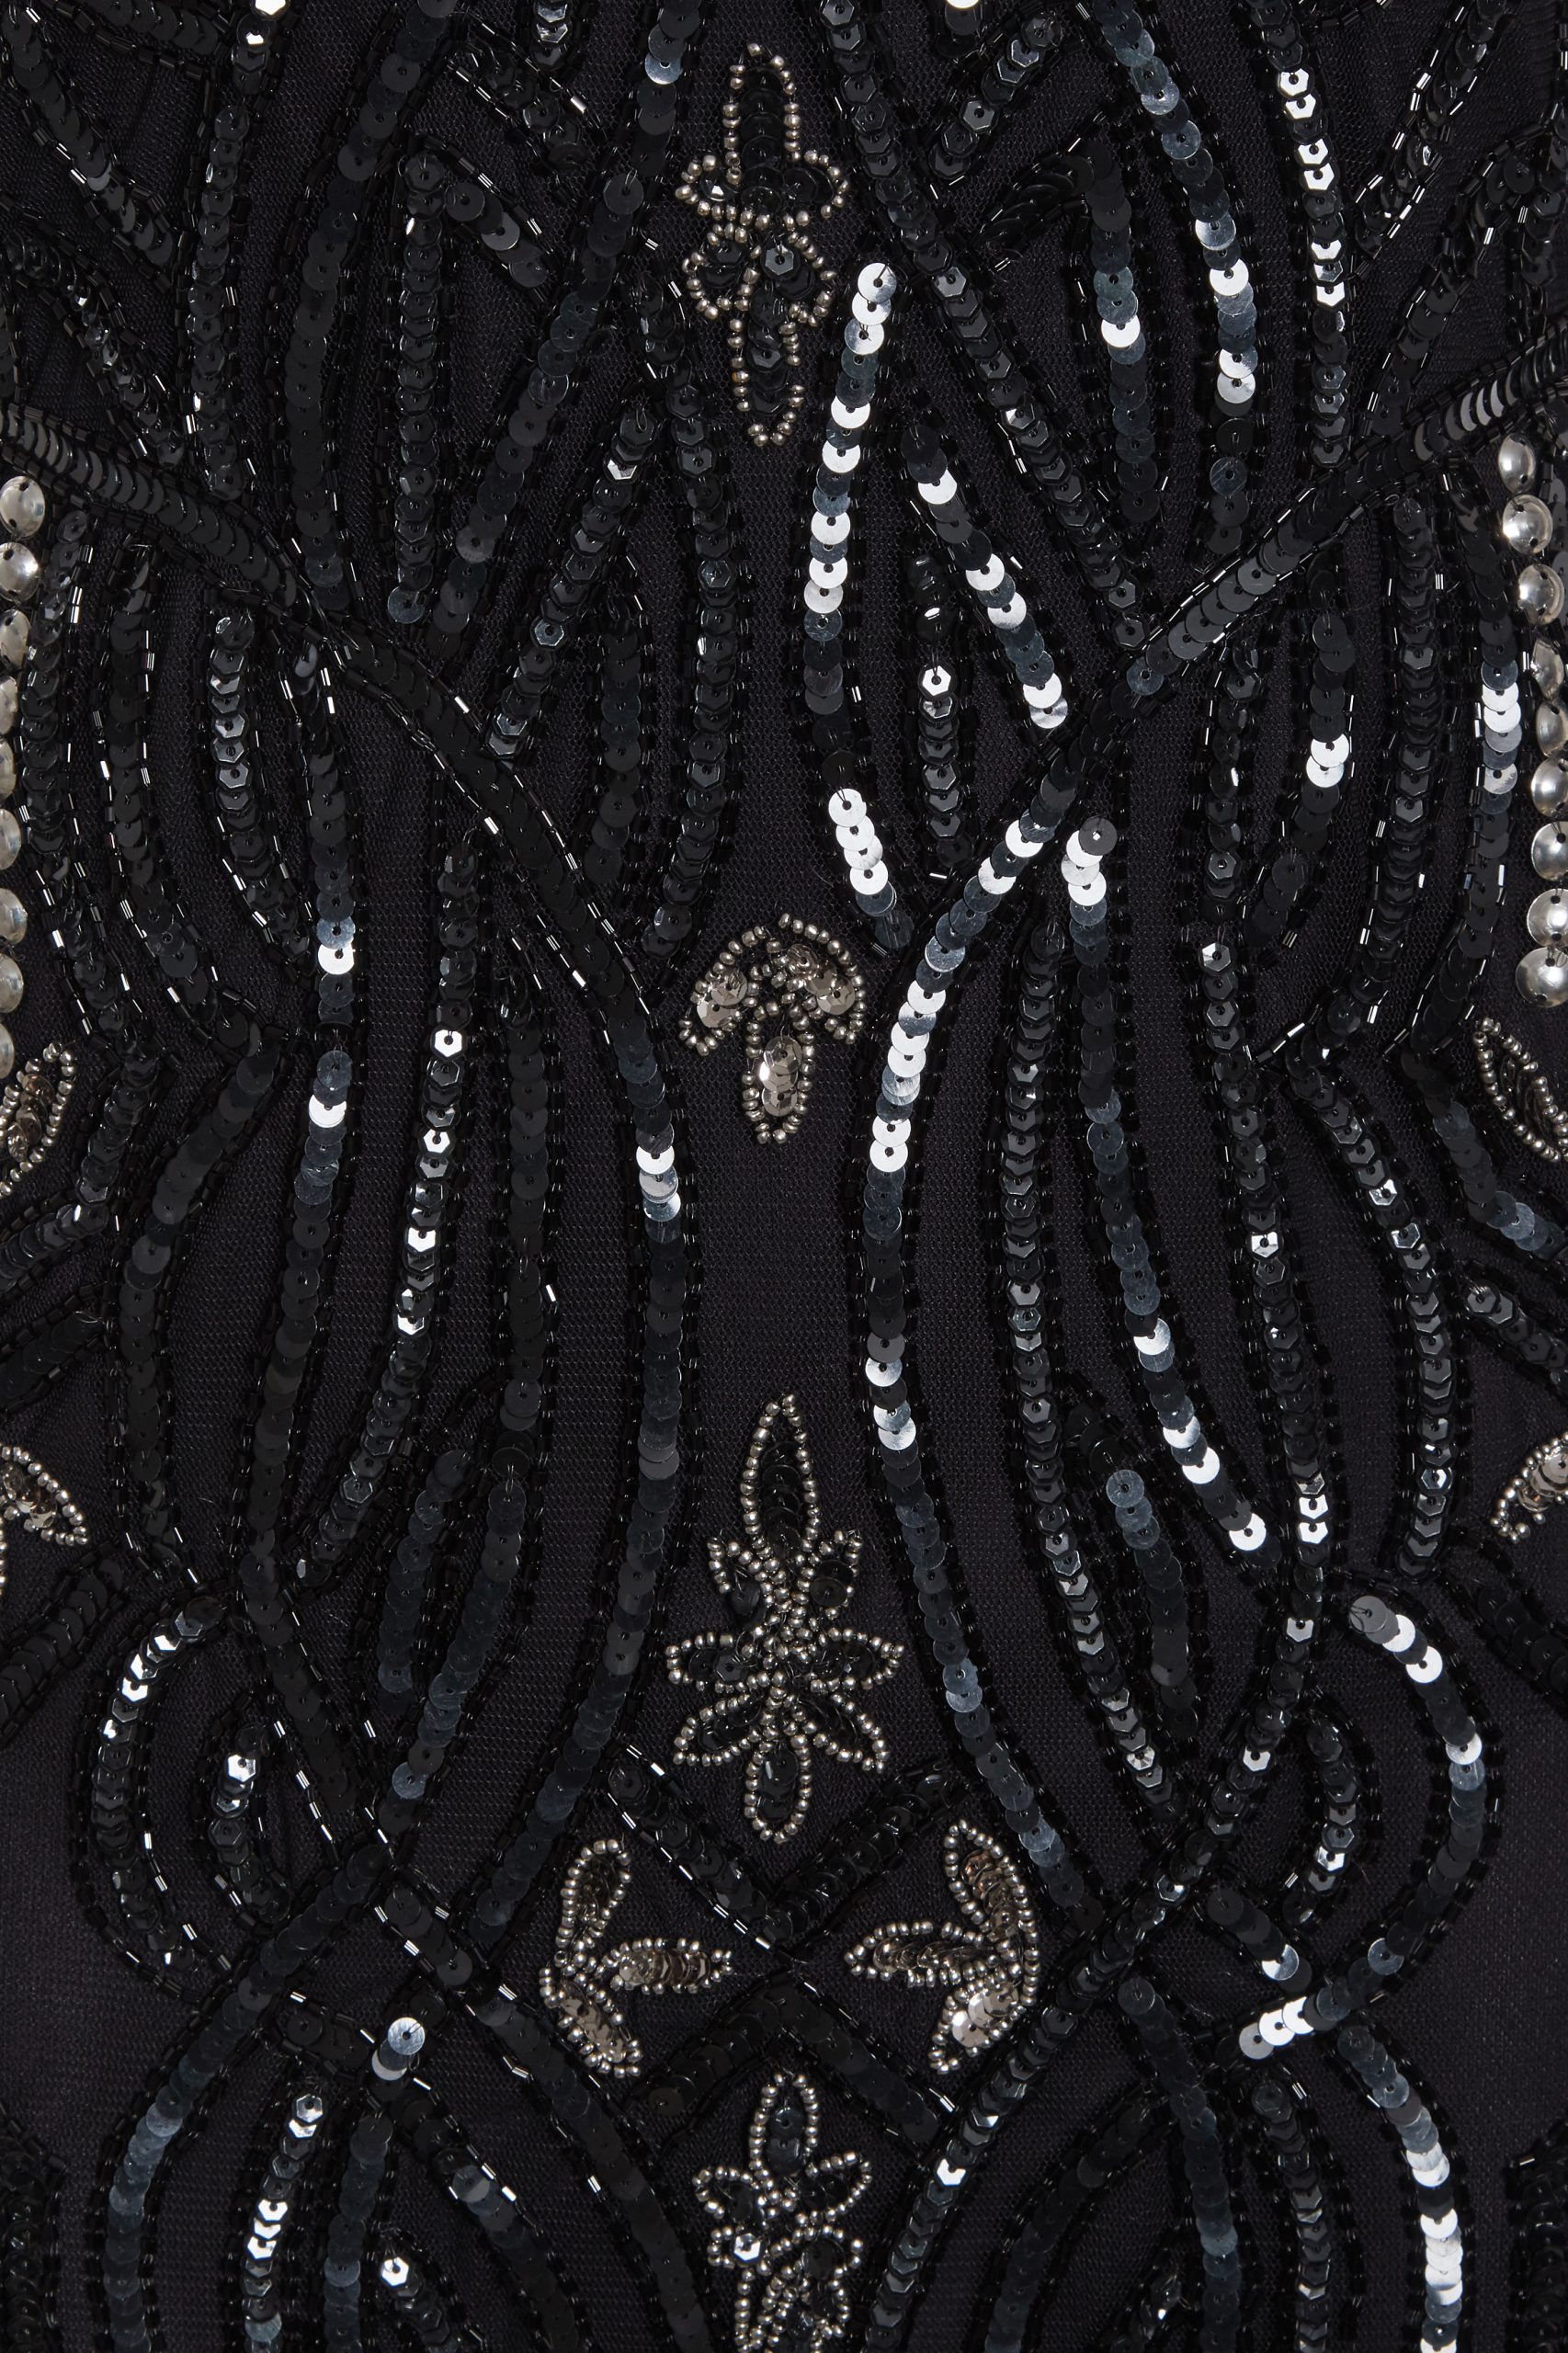 Clara - Black Sleeveless Gatsby 1920s Evening Dress | Jywal London